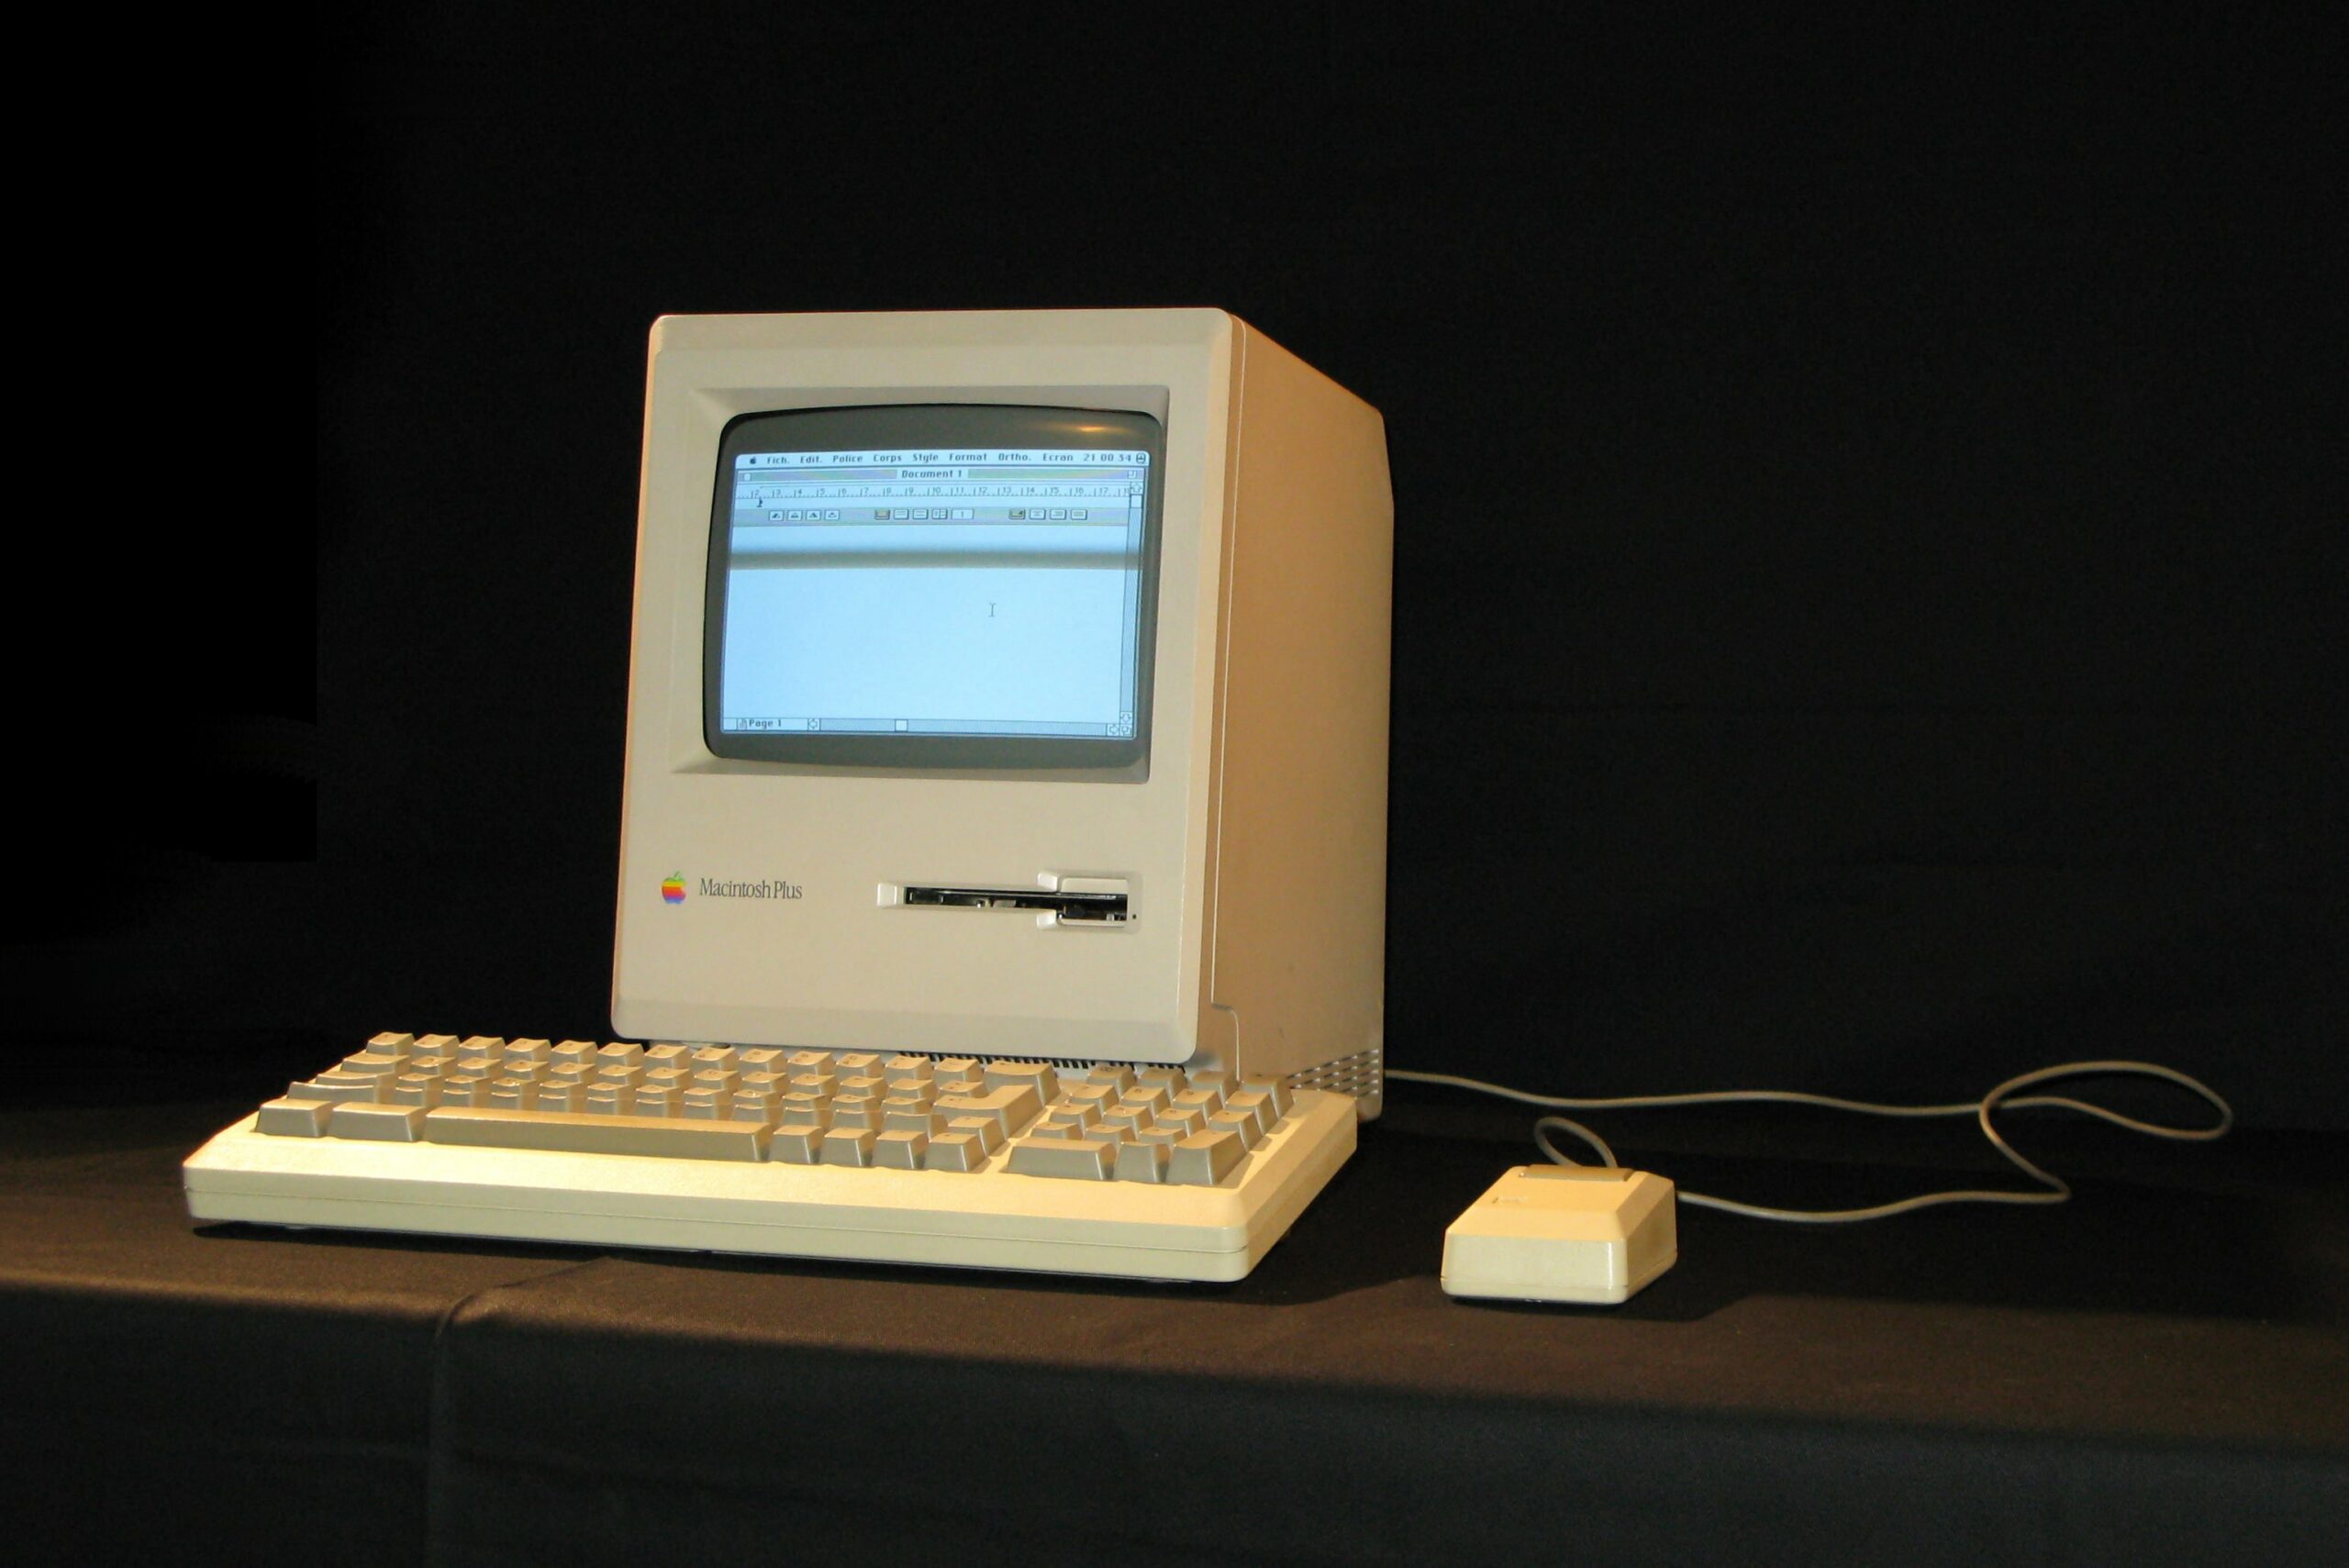 History Of Macintosh Pc